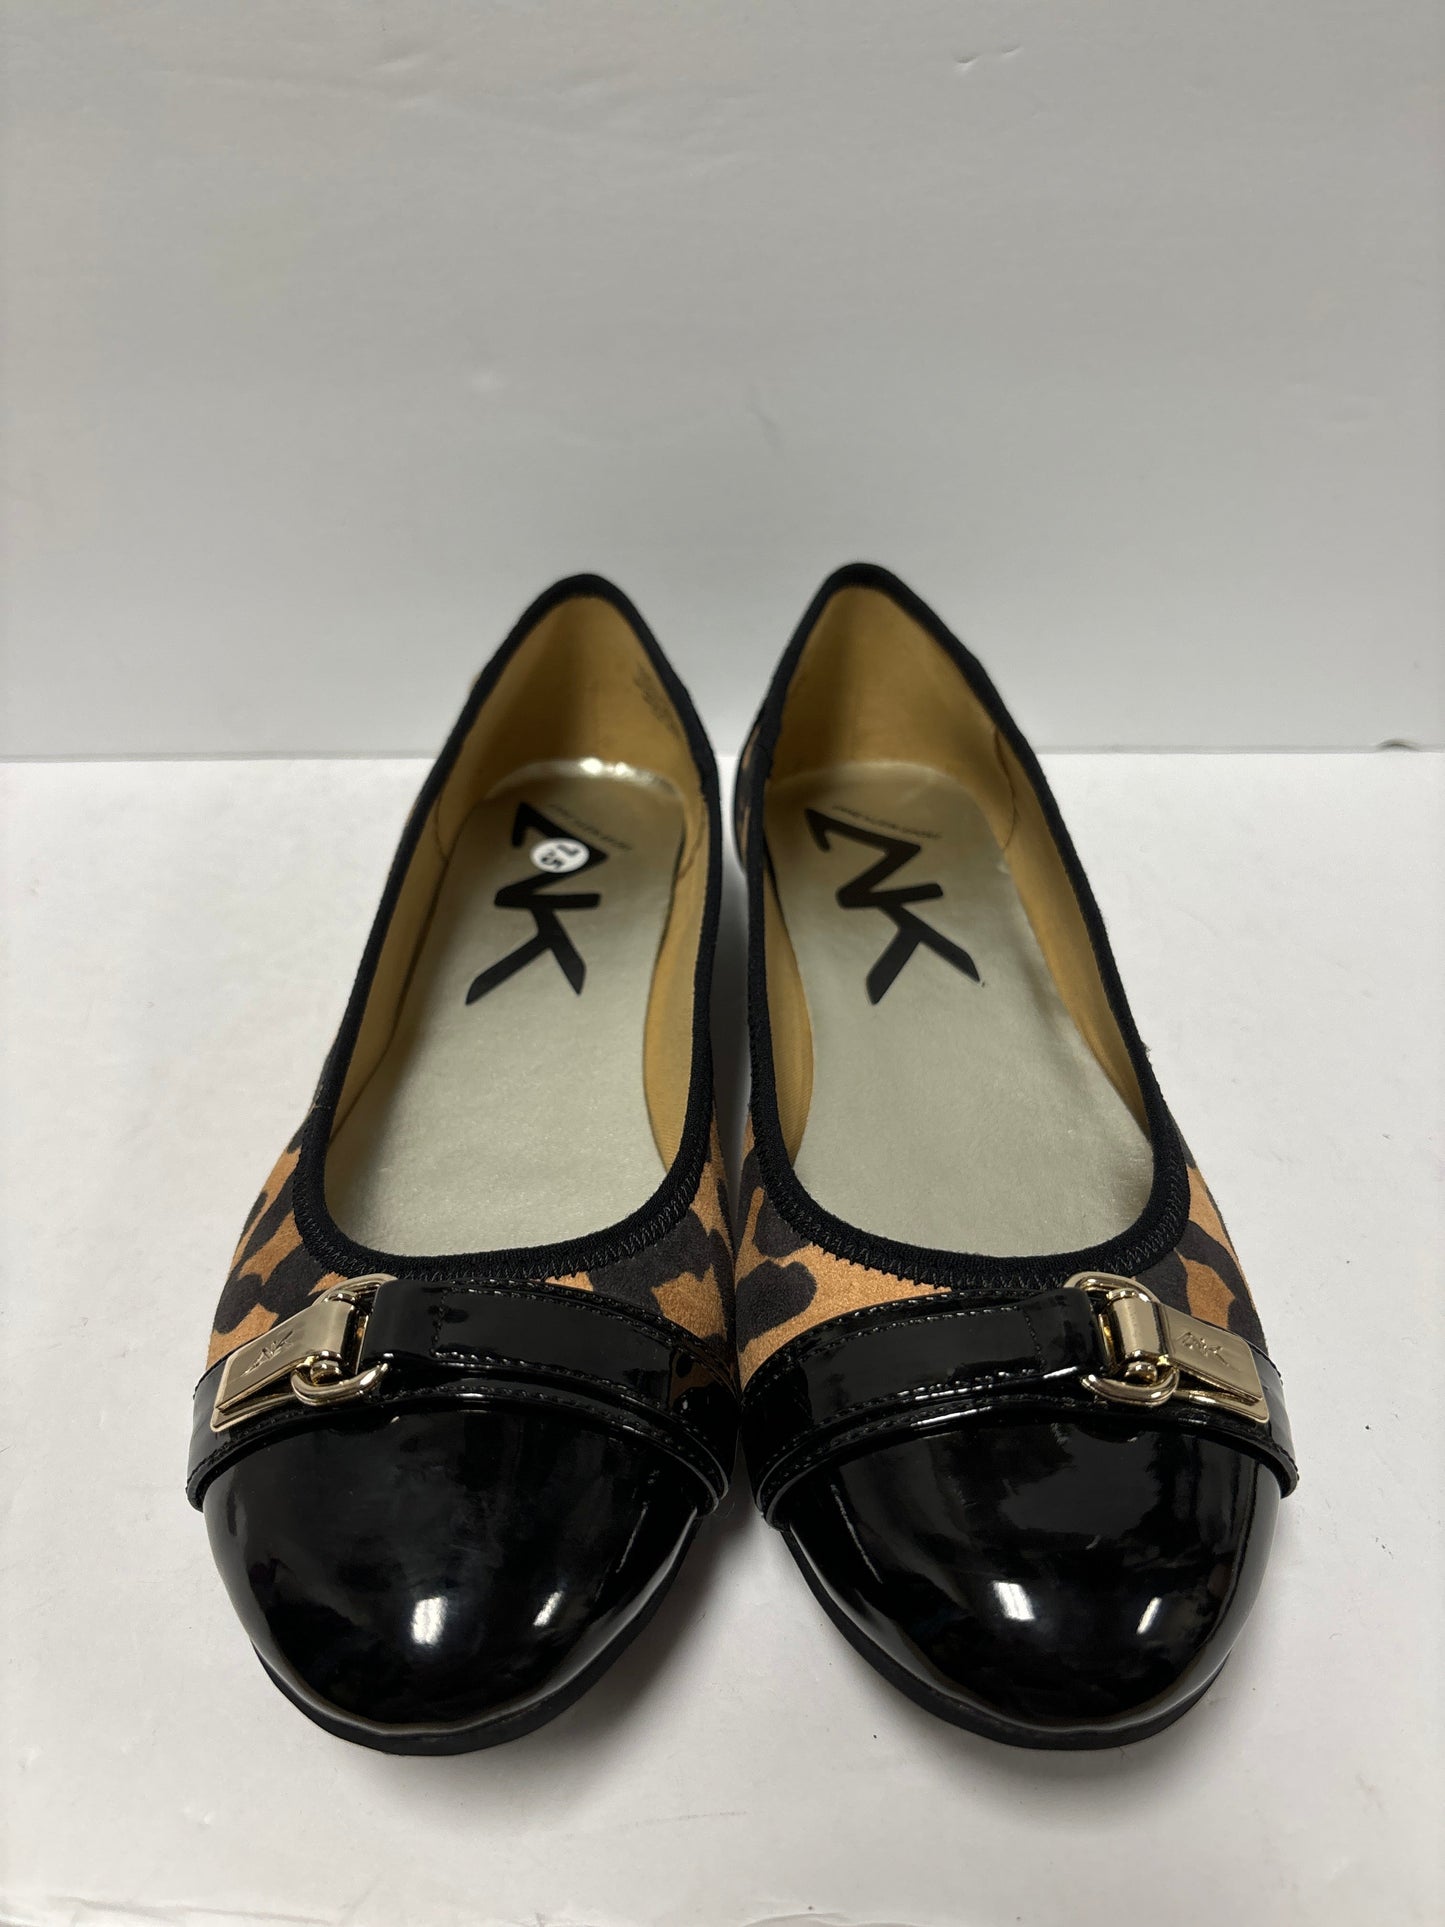 Animal Print Shoes Flats Anne Klein, Size 7.5